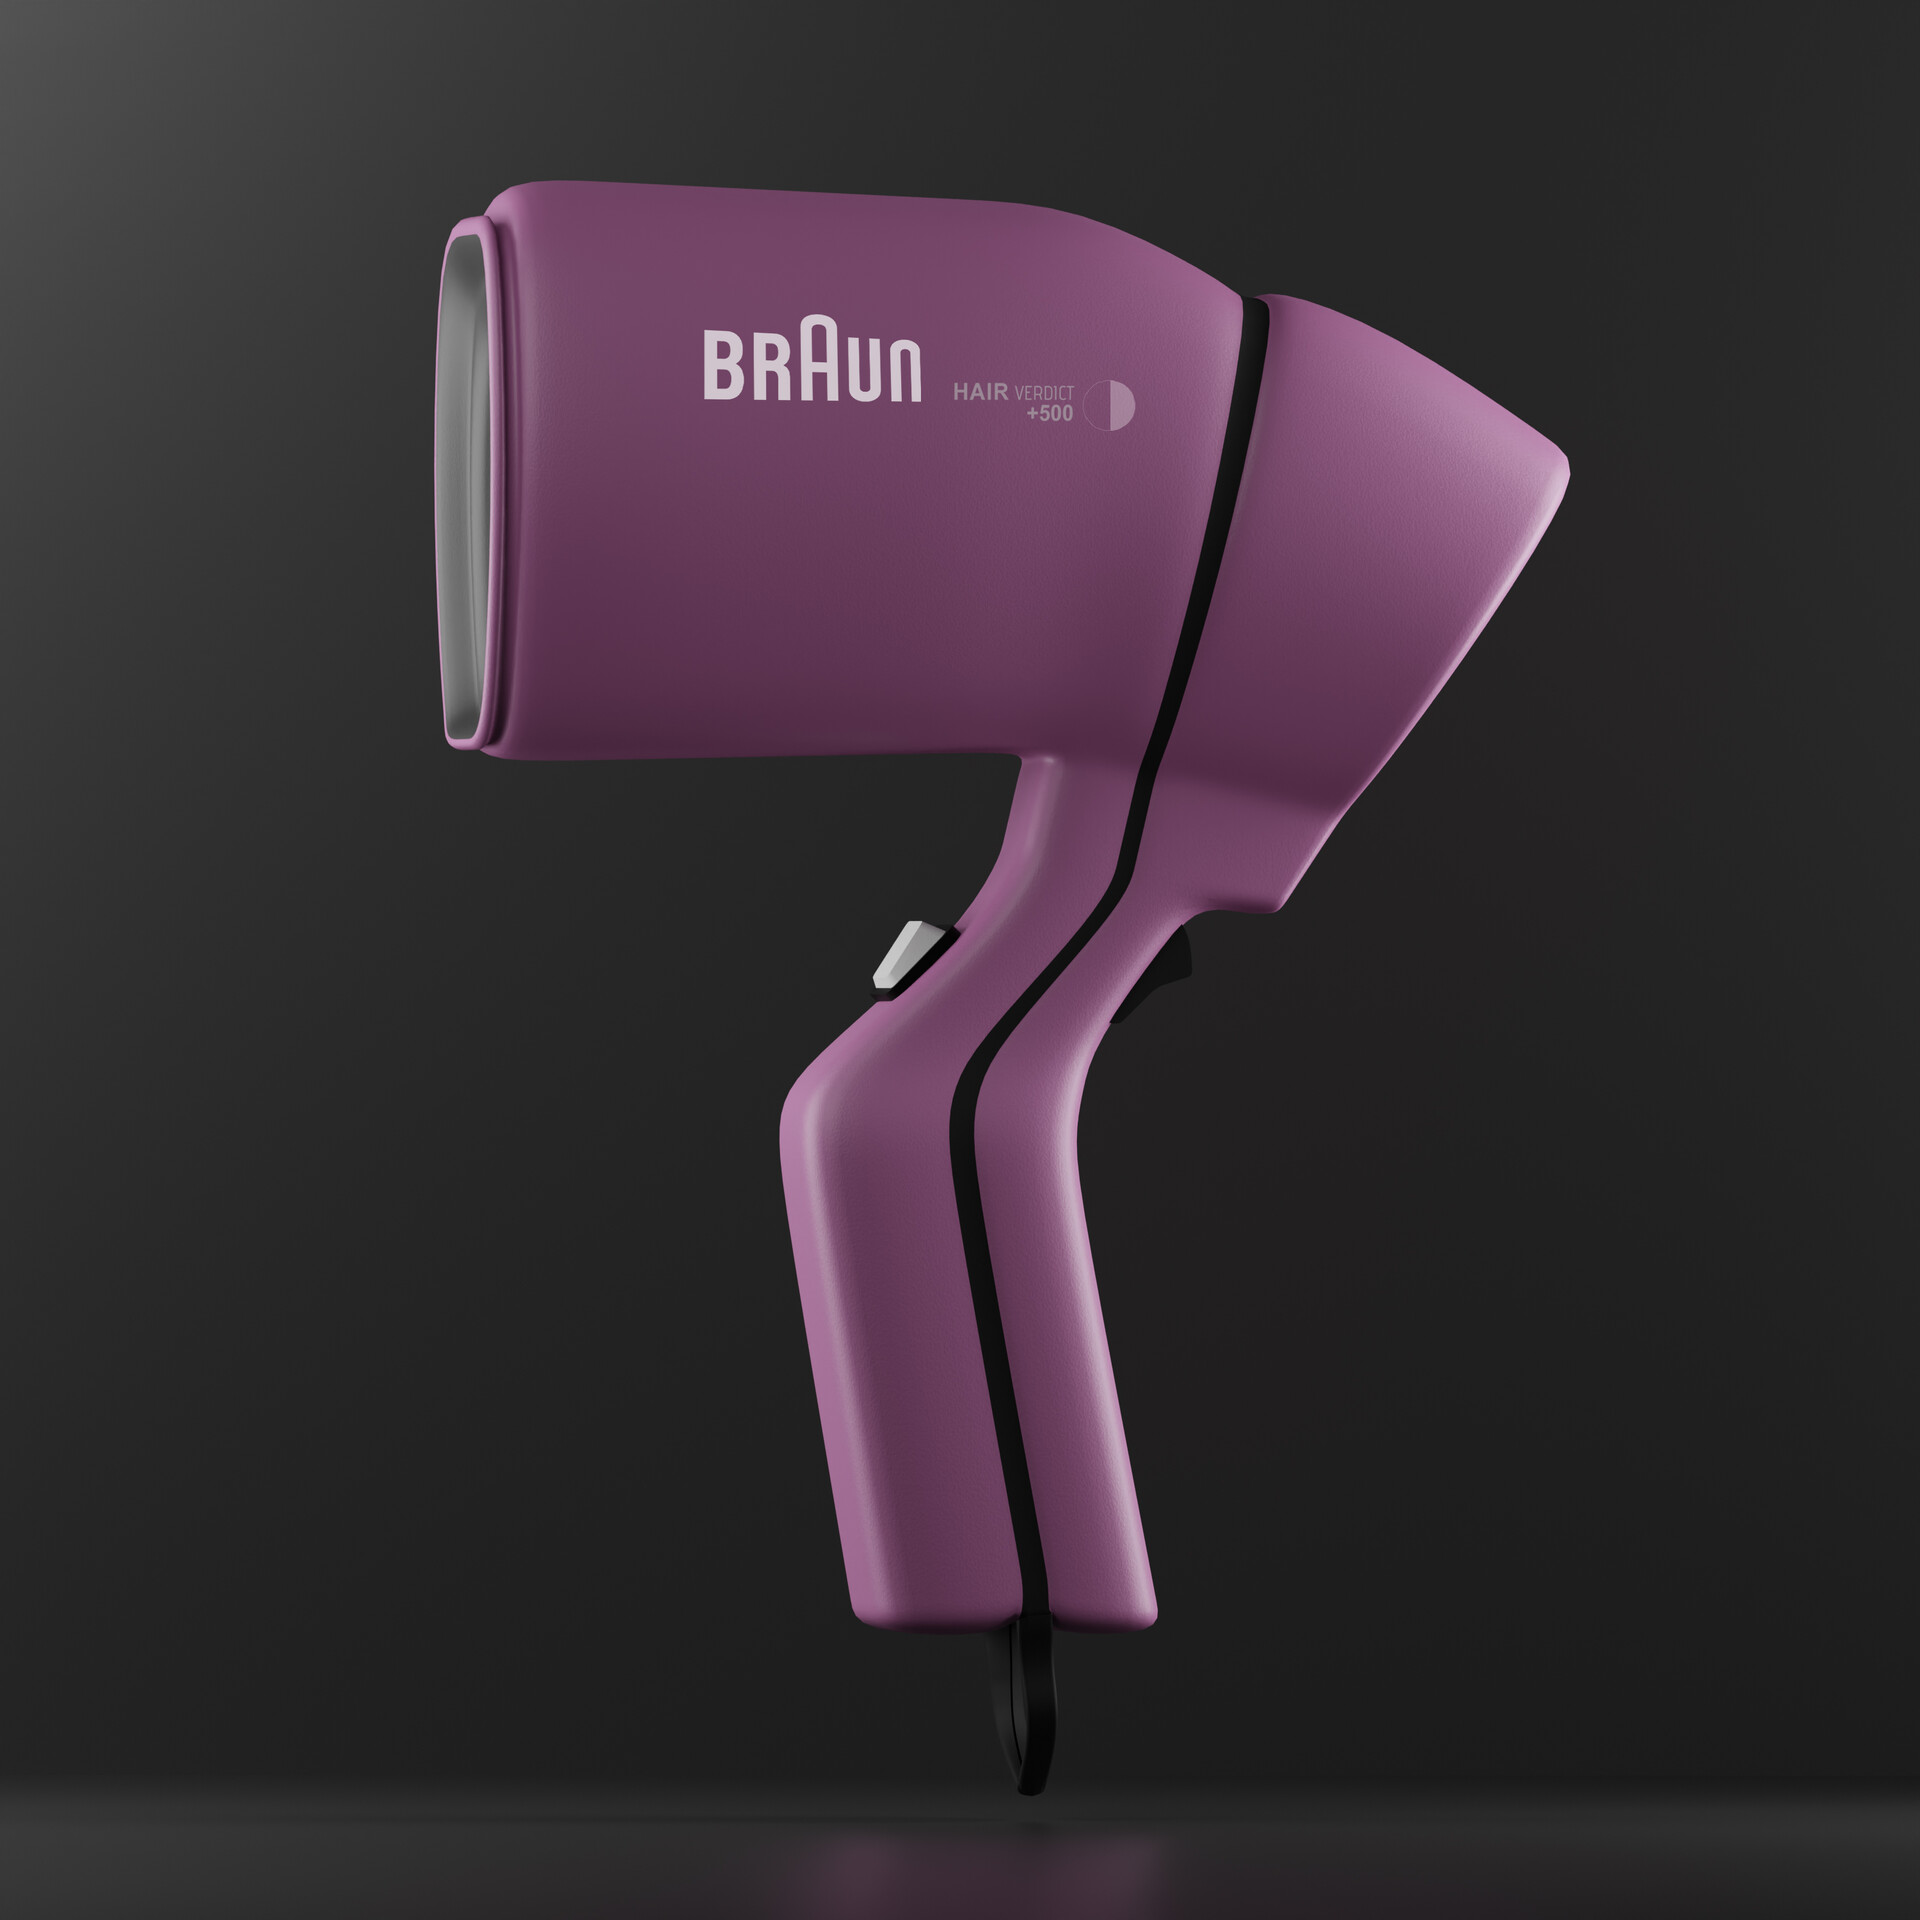 Womens Grooming  Braun  Hair Dryer  PG Shop  Owned by BGDPL  Authorised PG Distributor